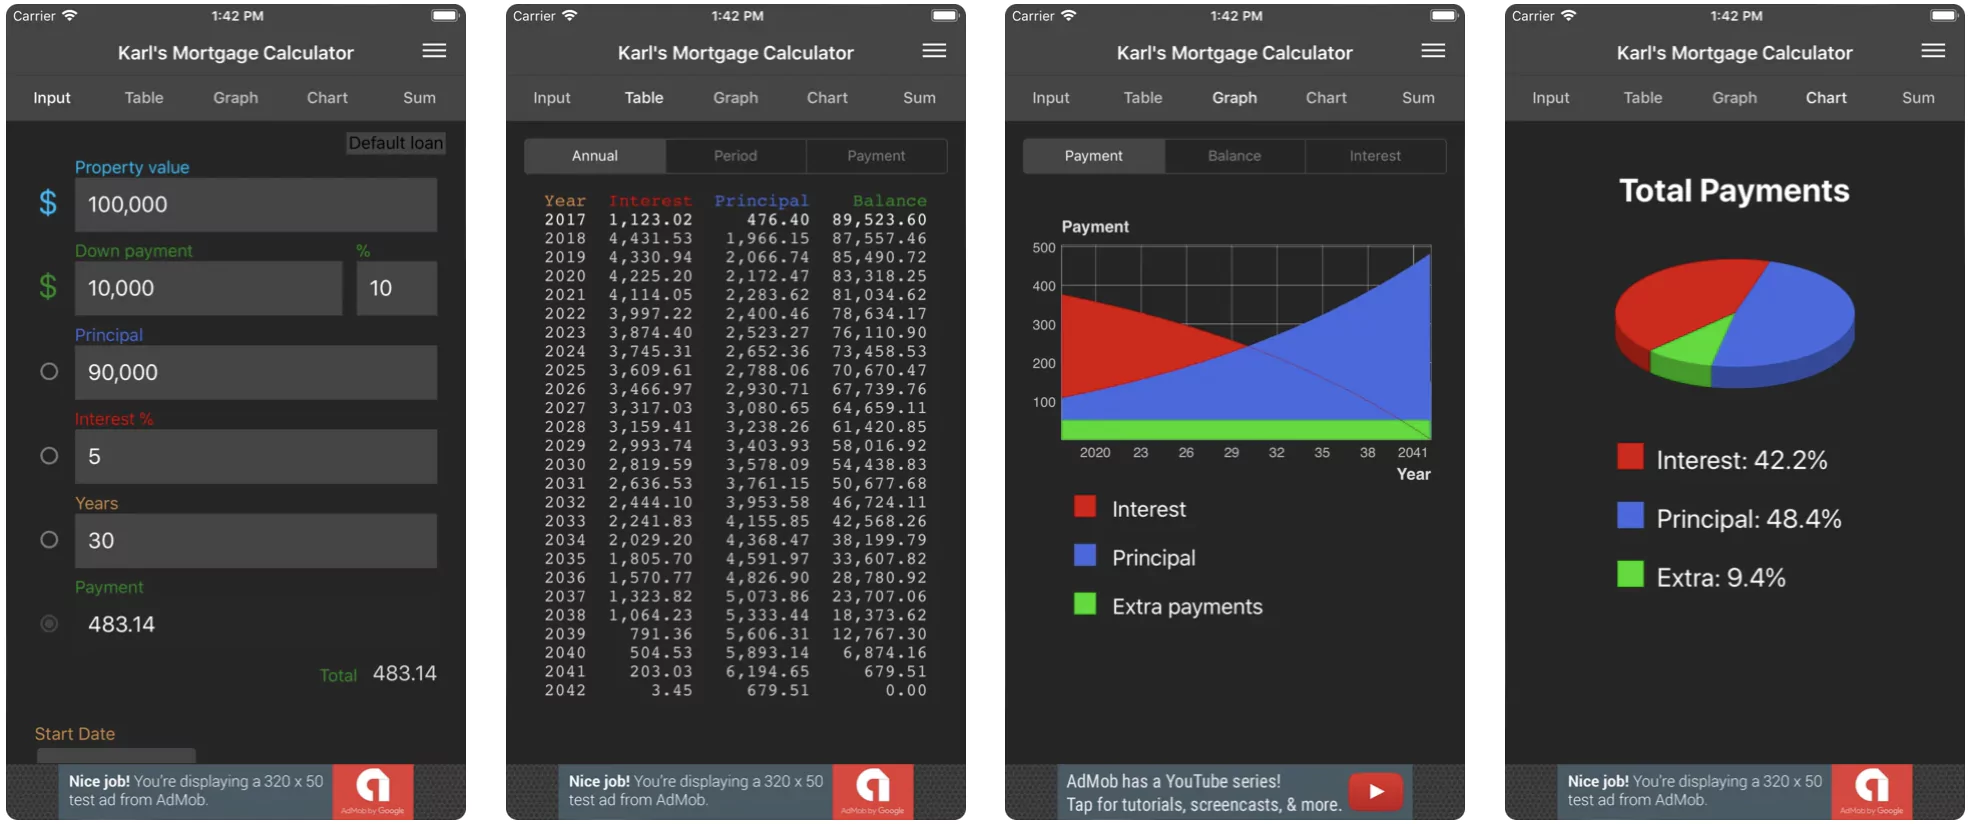 karls-mortgage-calculator